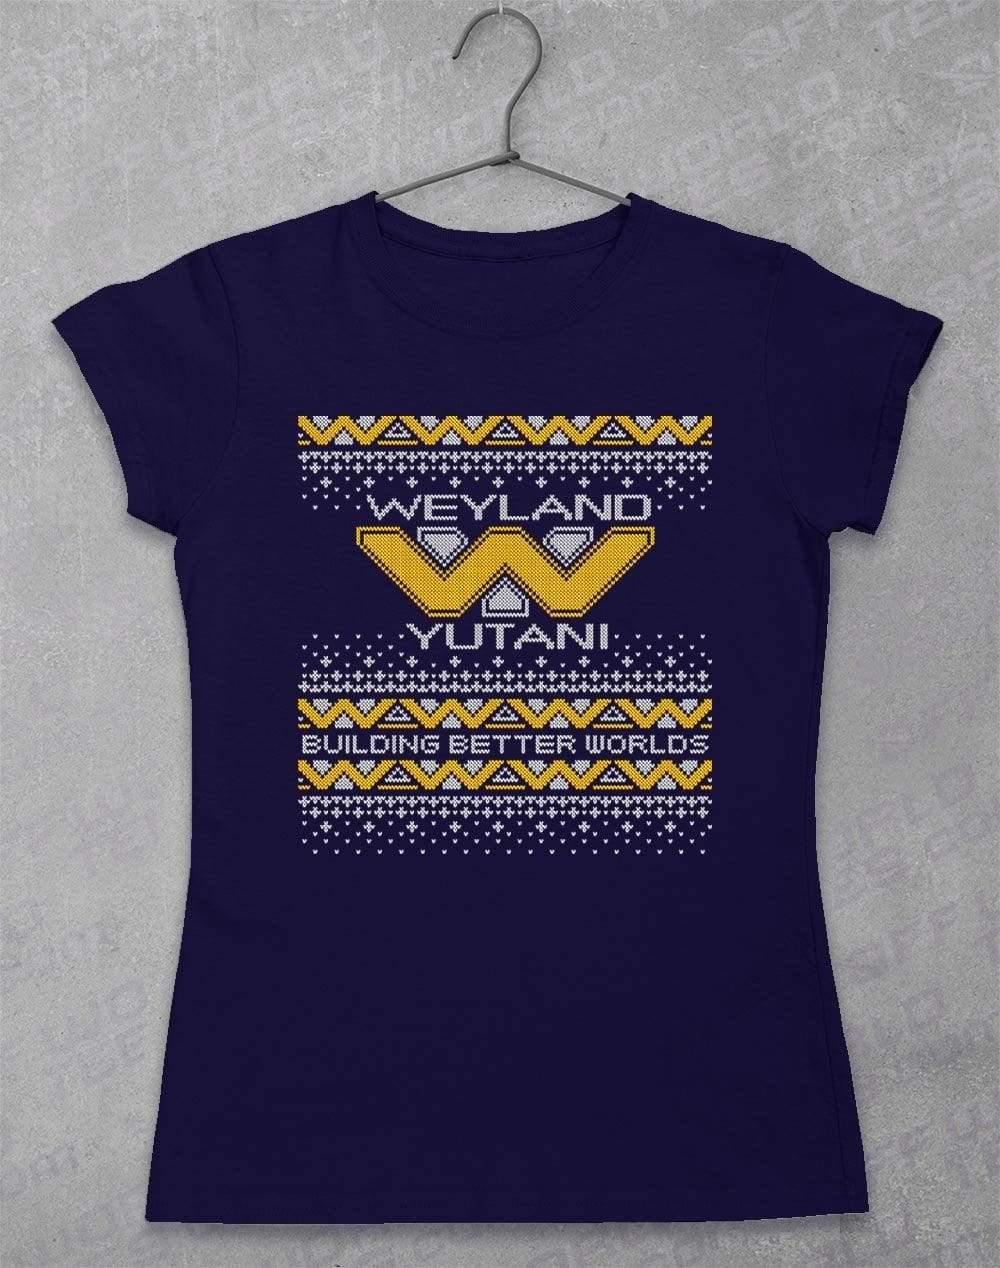 Weyland Yutani Festive Knitted-Look Women's T-Shirt 8-10 / Navy  - Off World Tees